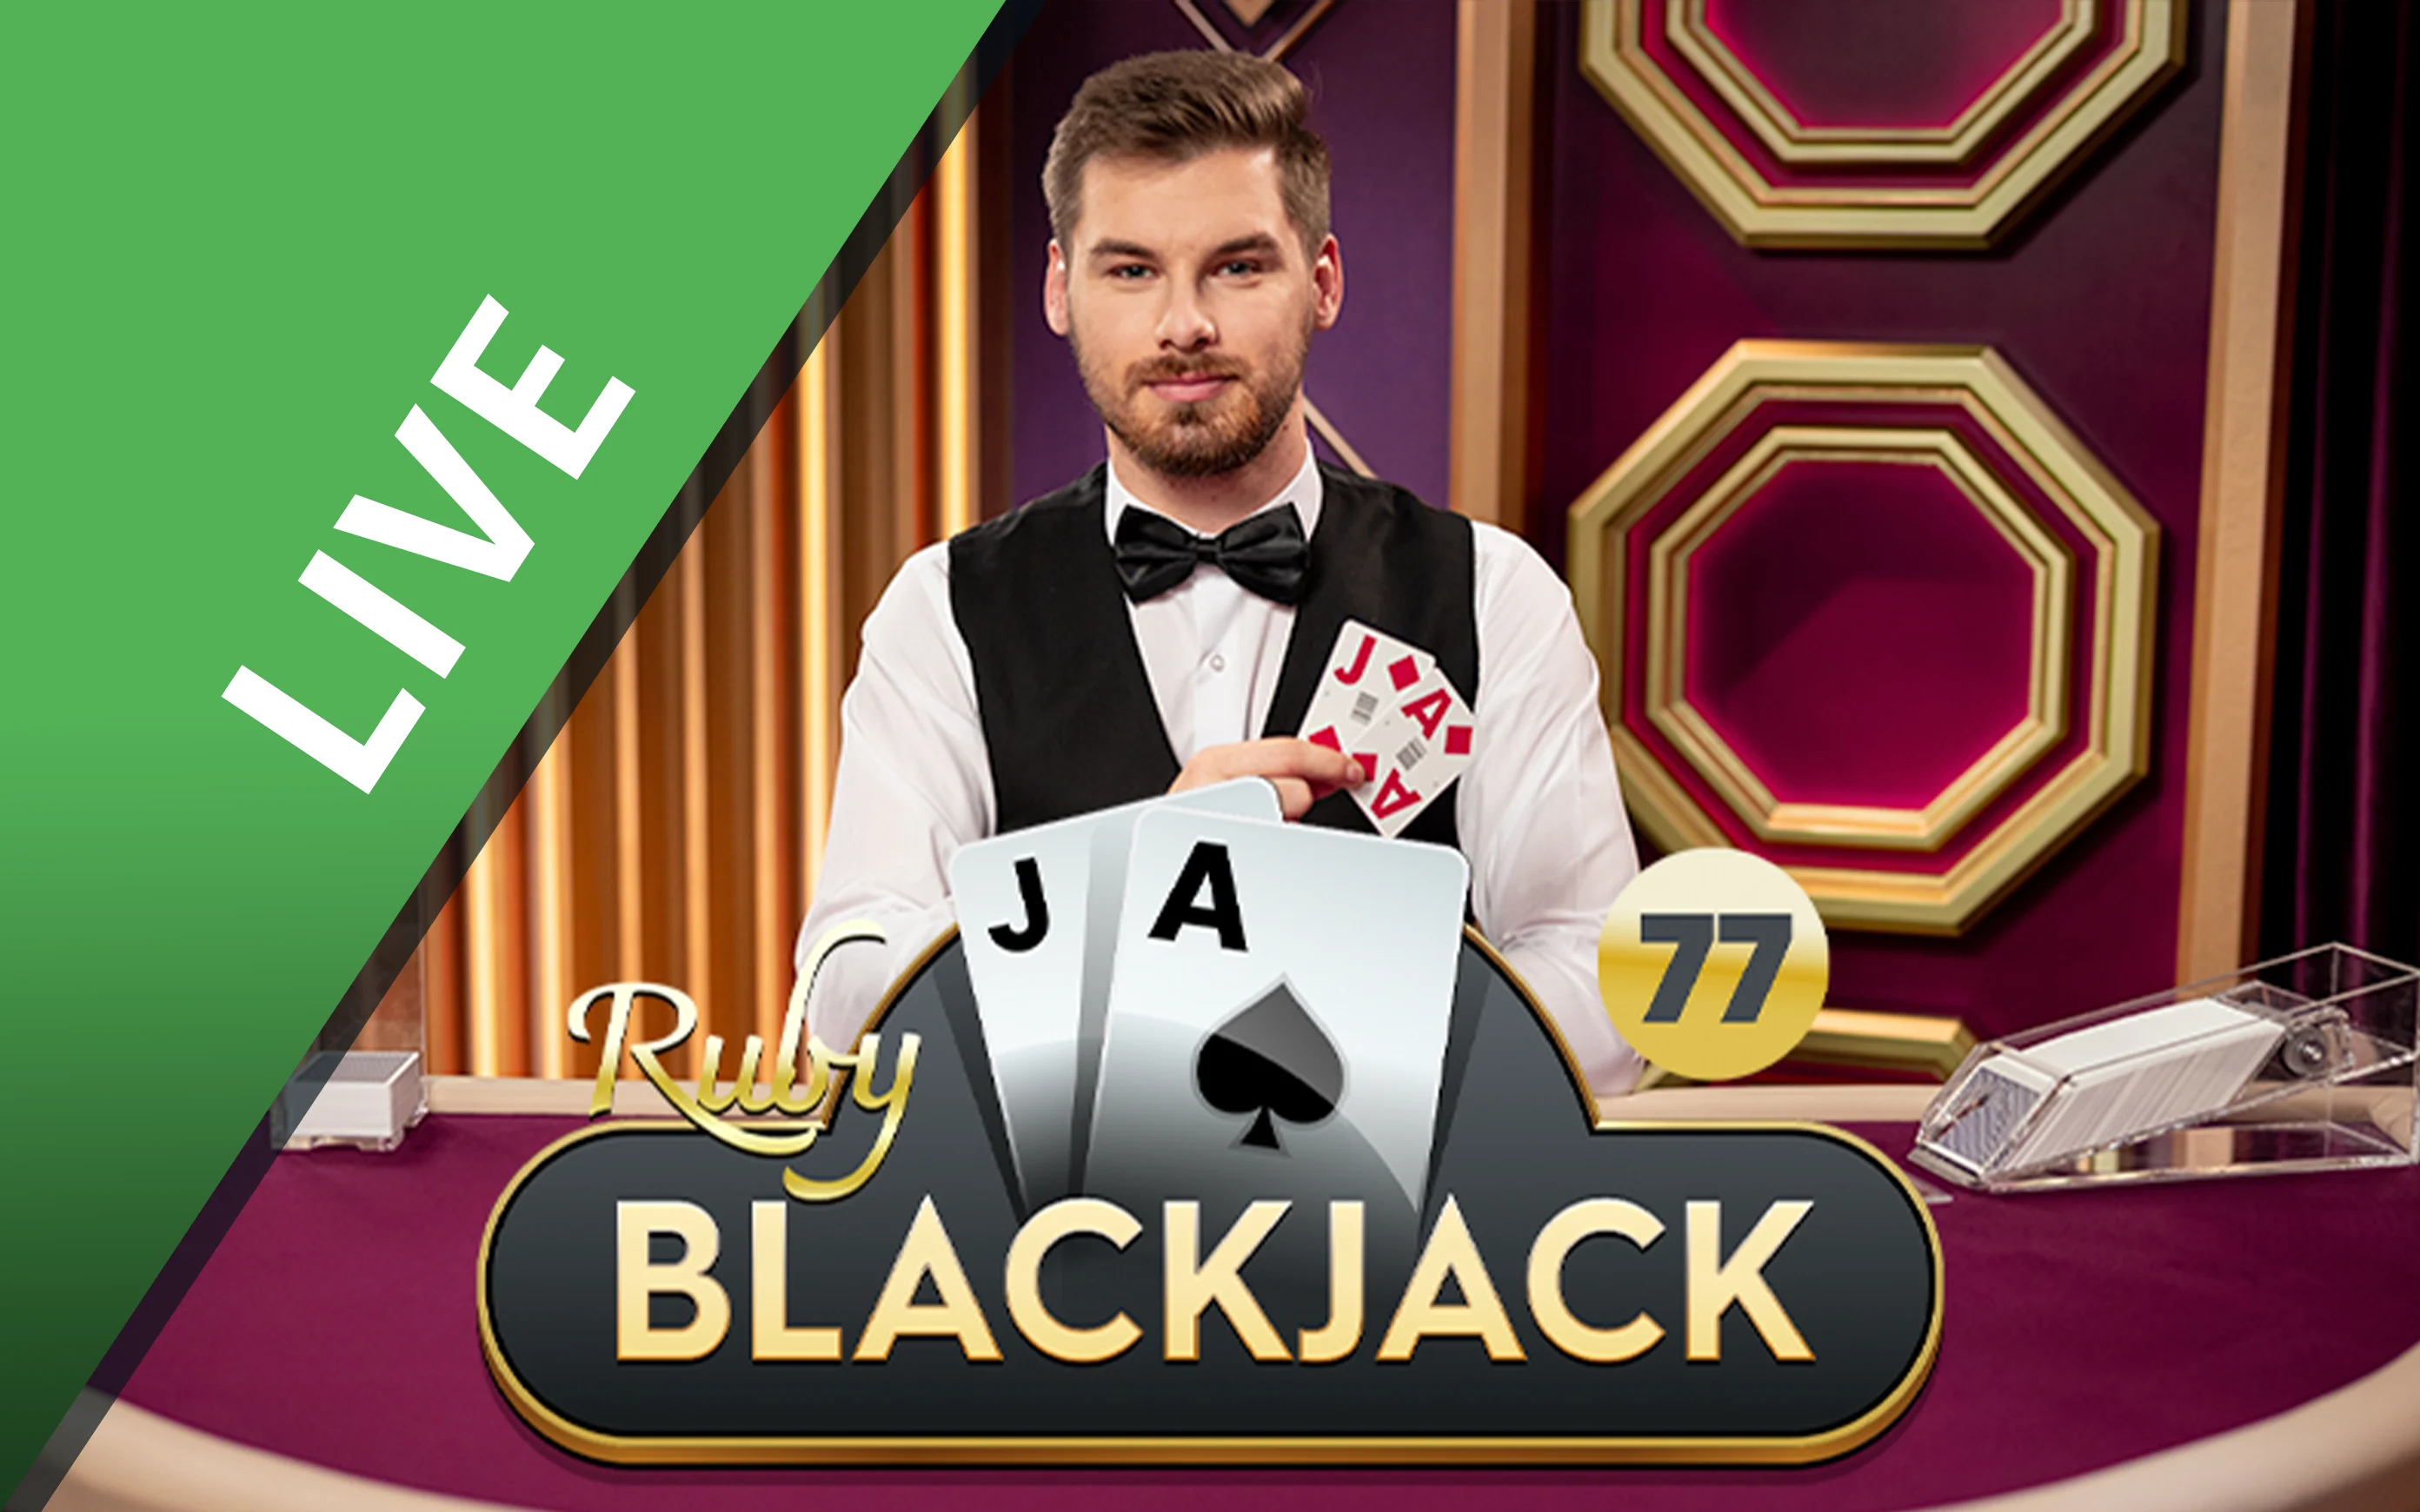 Play Blackjack 77 - Ruby on Starcasino.be online casino